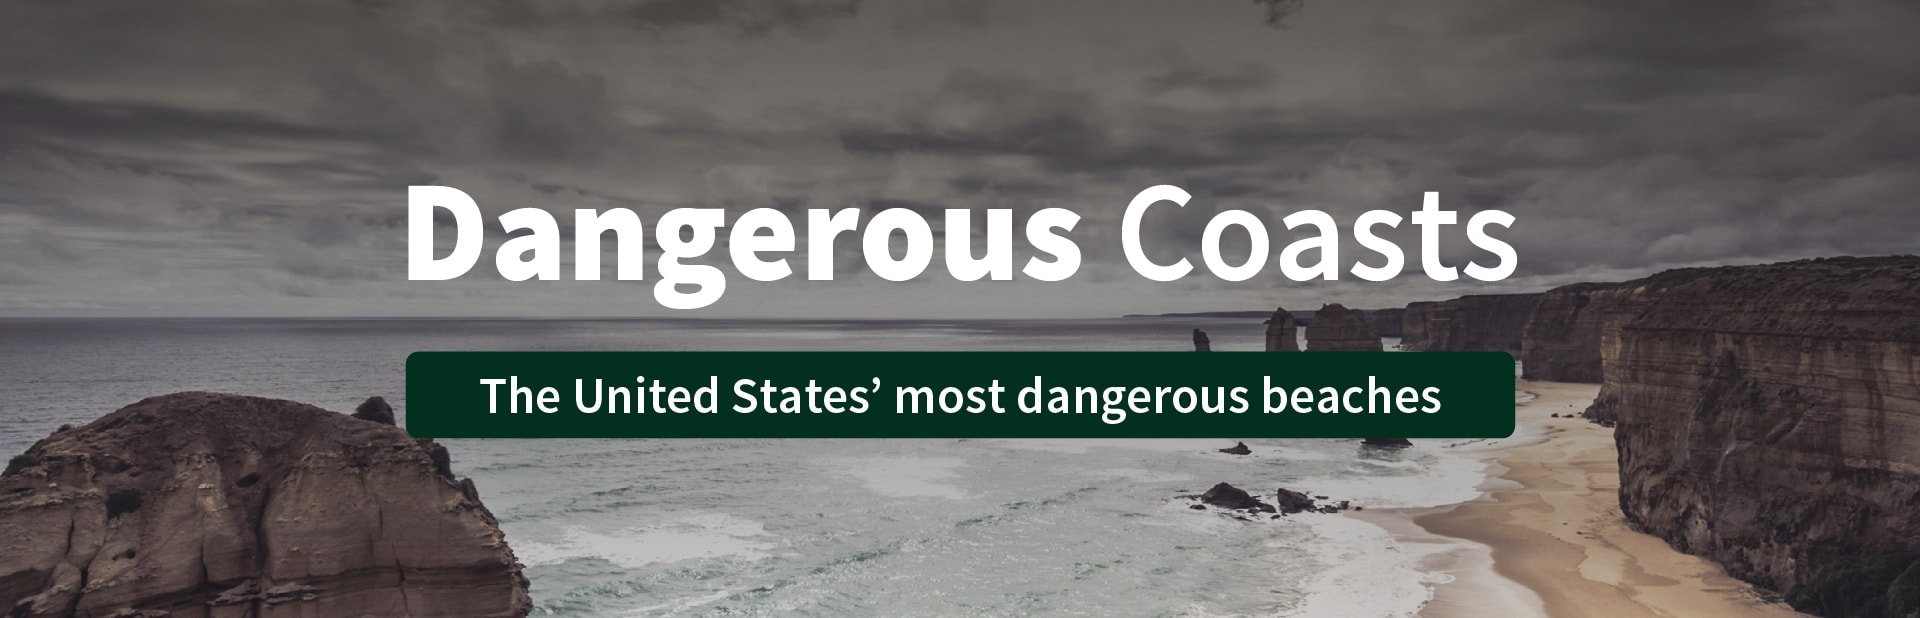 Dangerous Coasts: The United States’ Most Dangerous Beaches